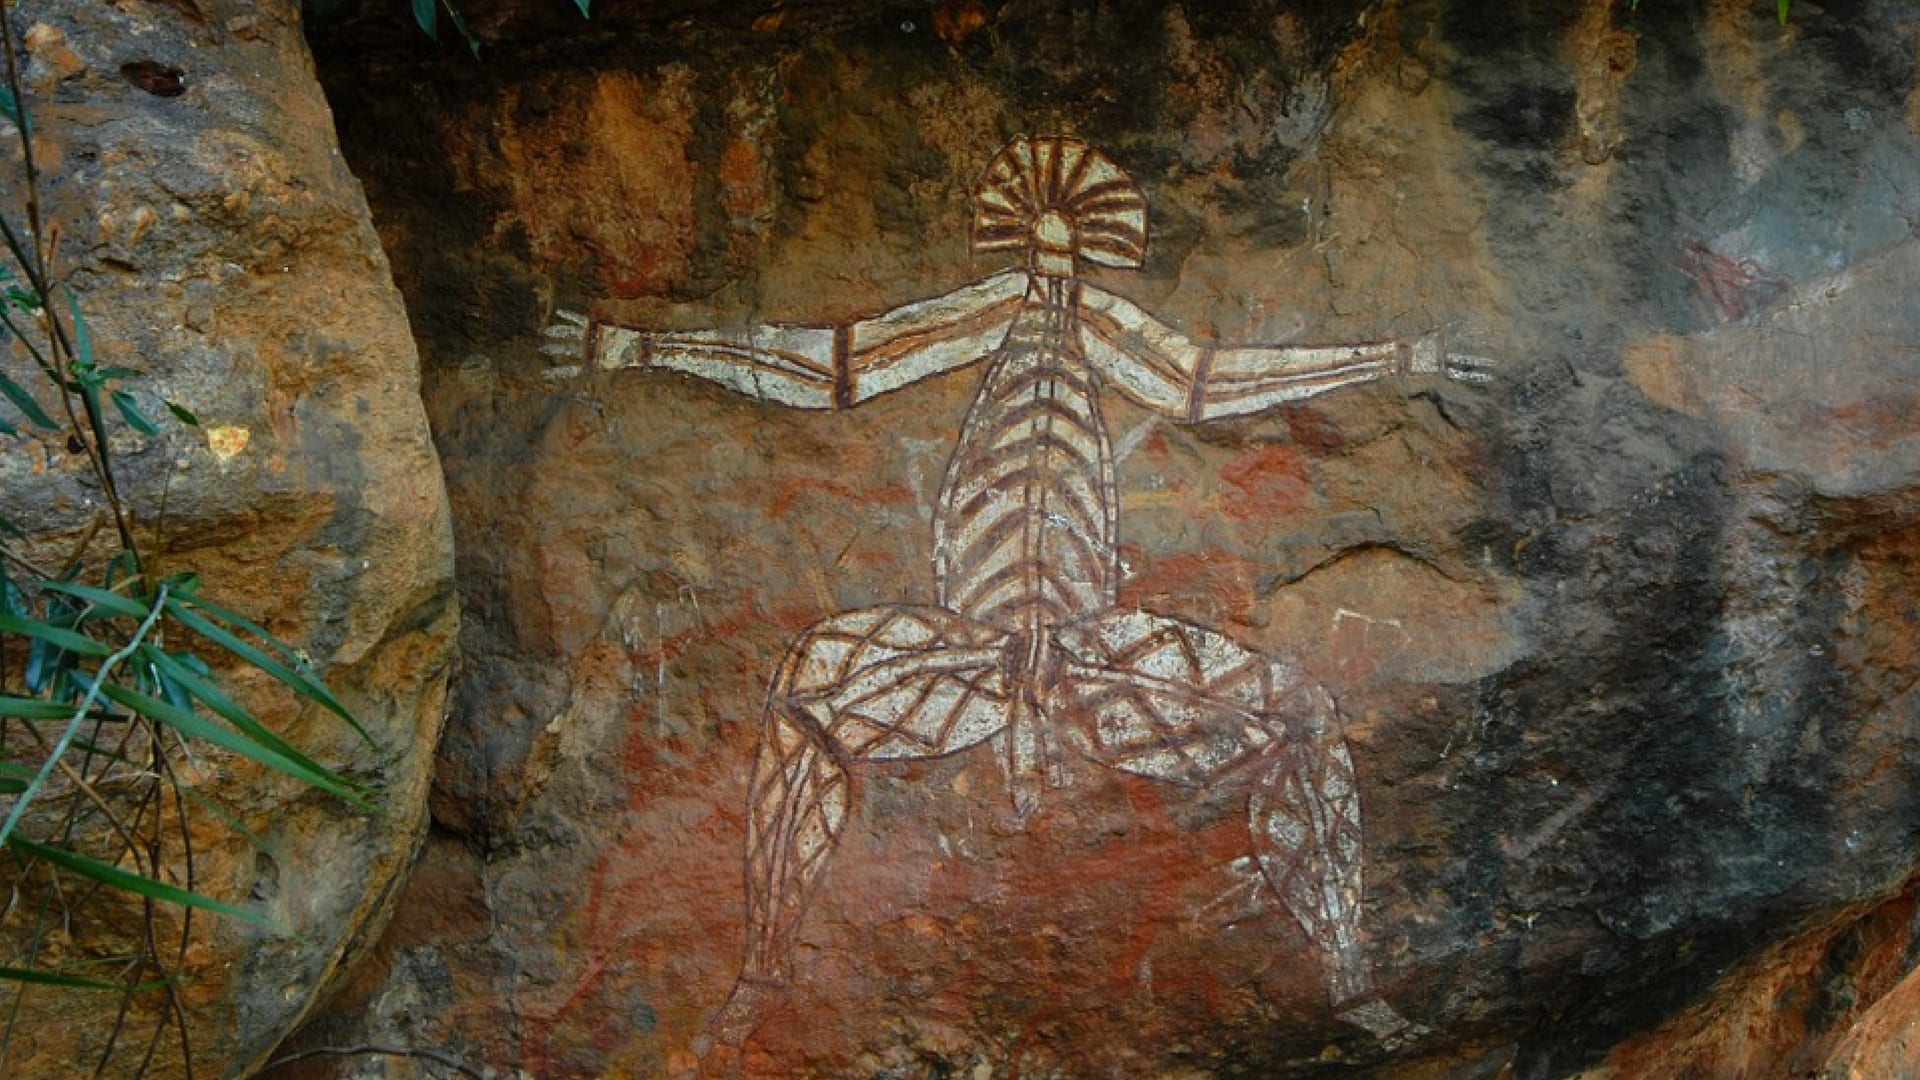 Visit Australia for: An Aboriginal rock painting in Kakadu